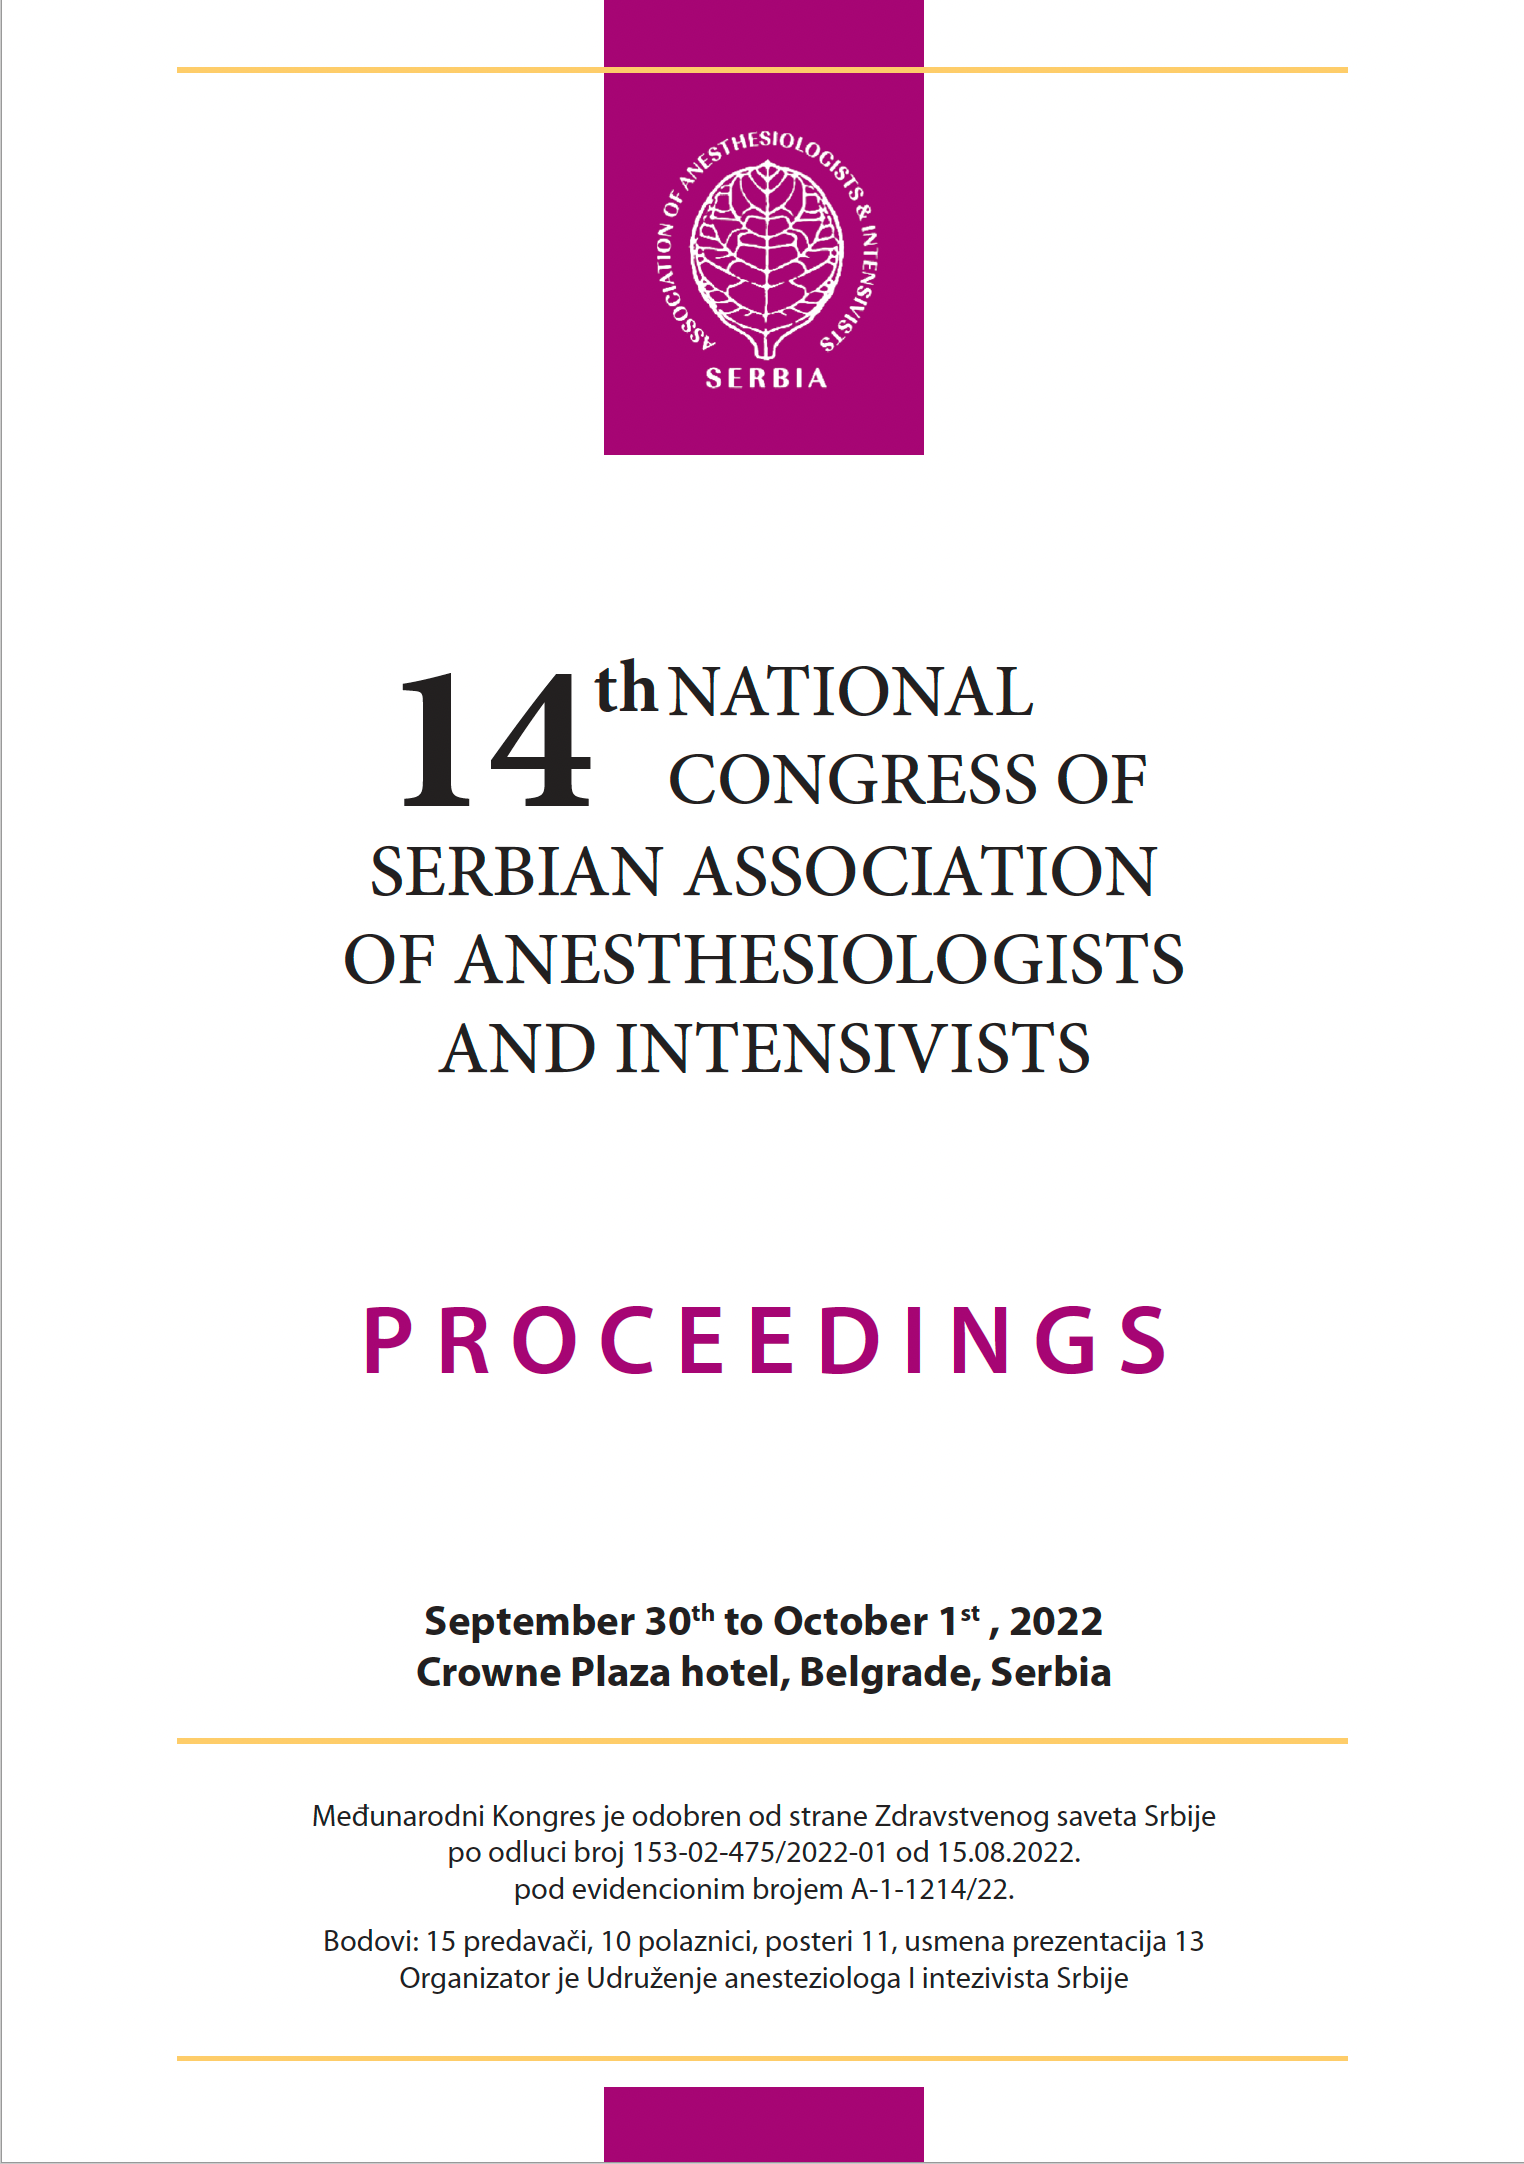 14th INTERNATIONAL CONGRESS OF SERBIAN ASSOCIATION OF ANESTHESIOLOGIST AND INTENSIVISTS